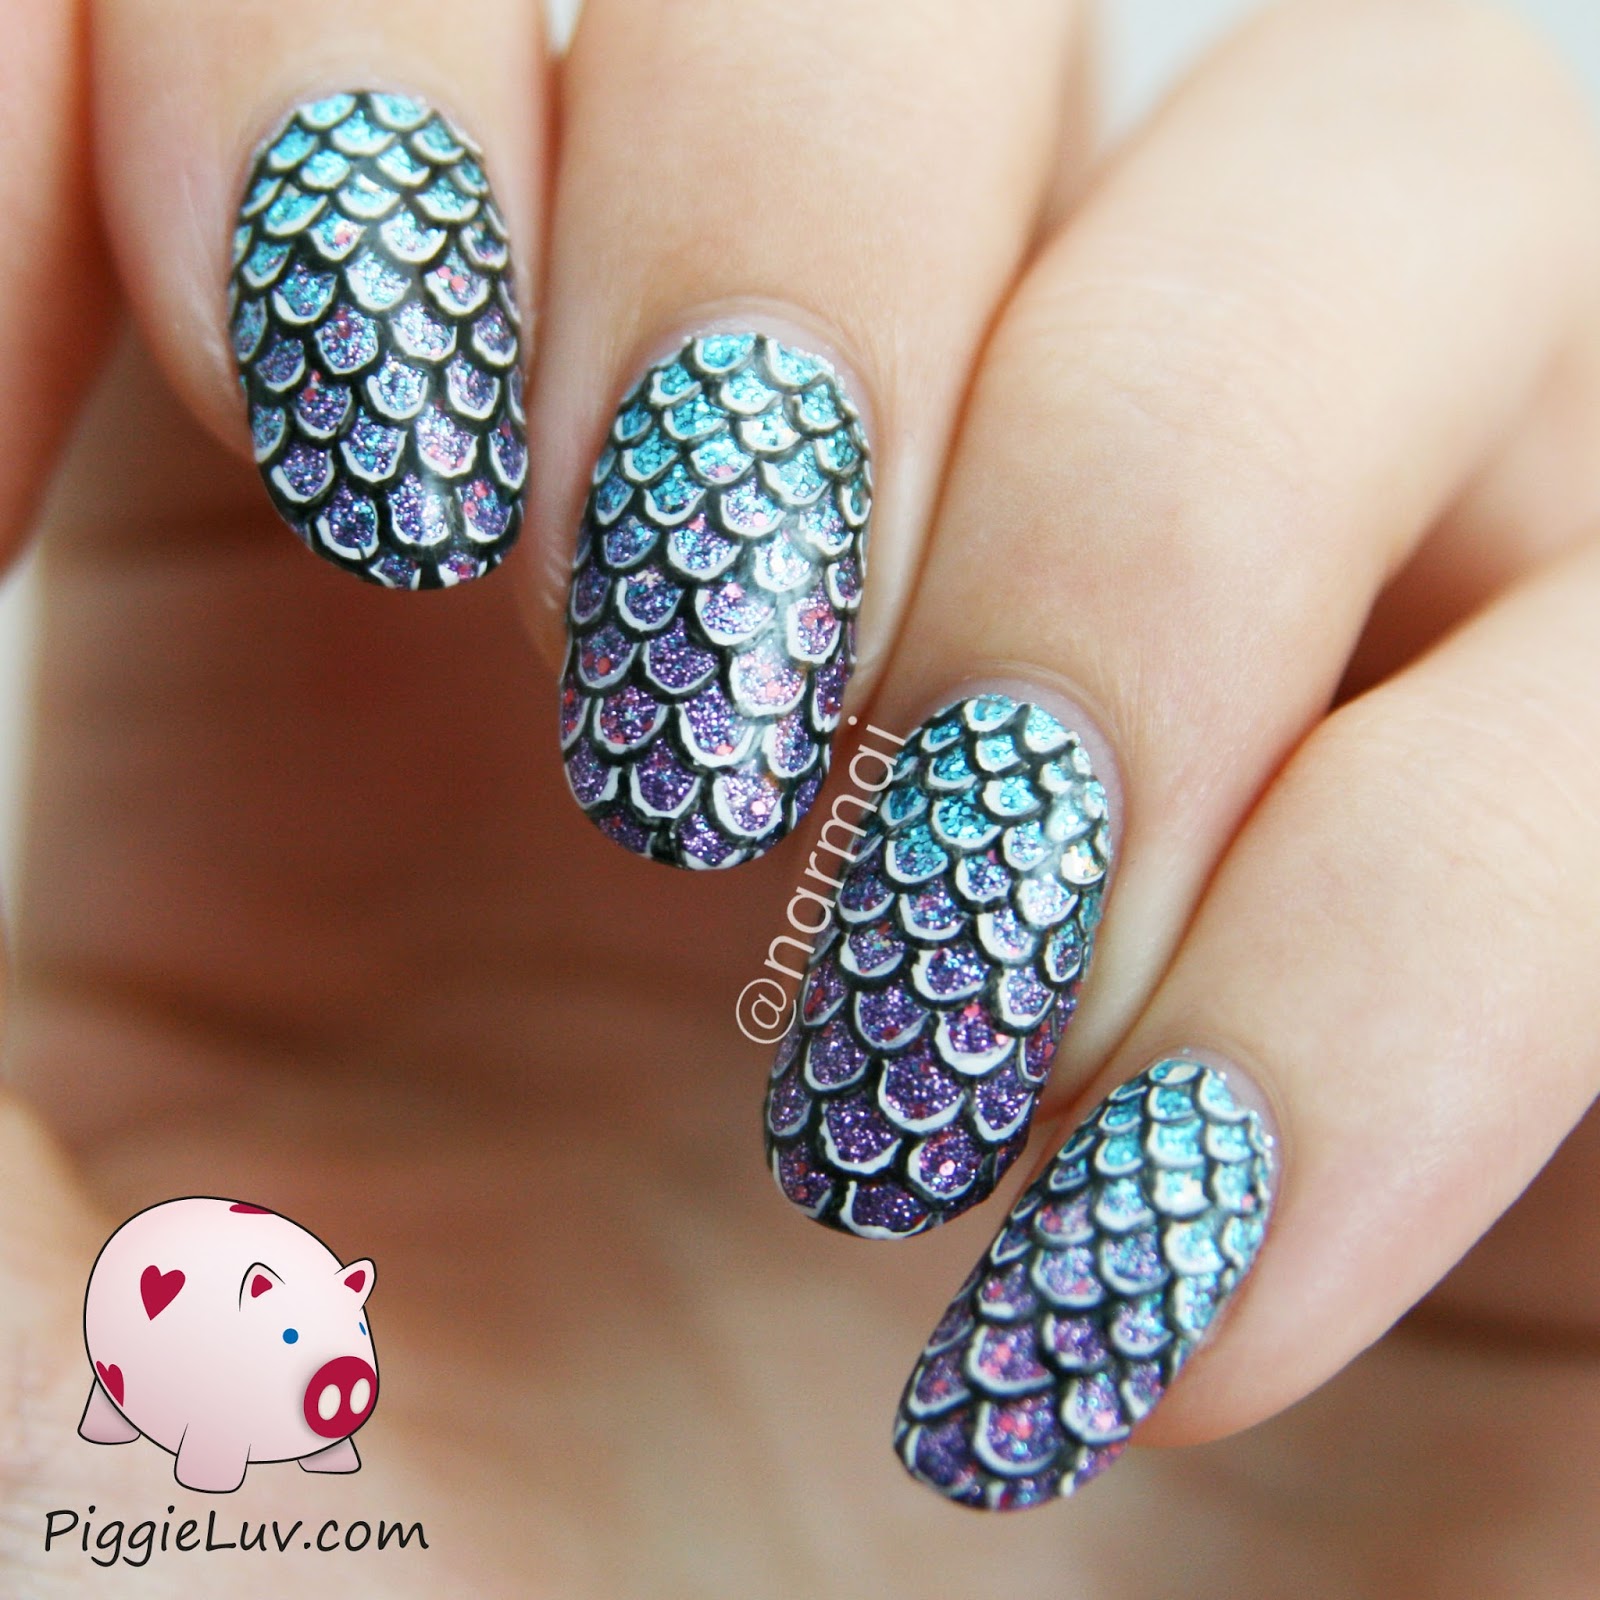 PiggieLuv: Mermaid scales nail art + video tutorial